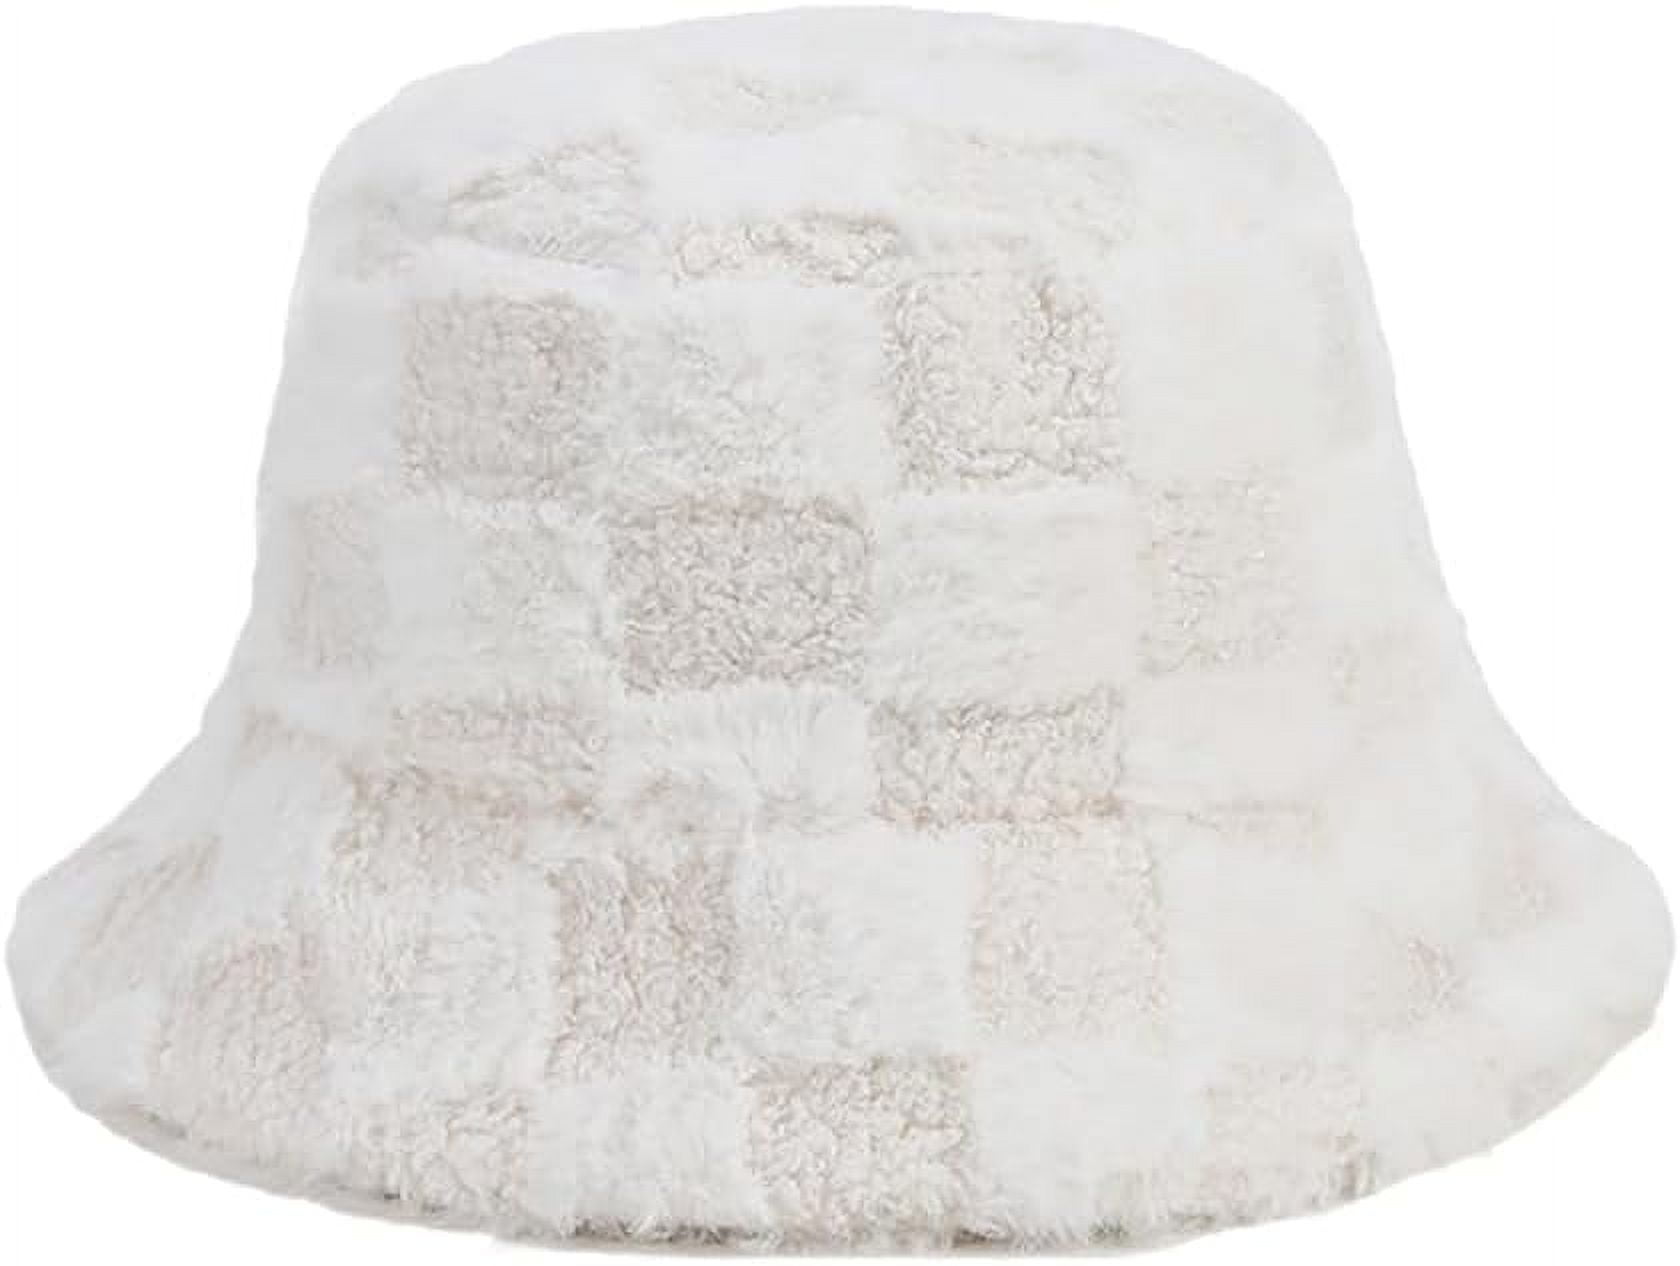 Kukuzhu Women Winter Faux Fur Plaid Bucket Hat Fuzzy Warm Stylish